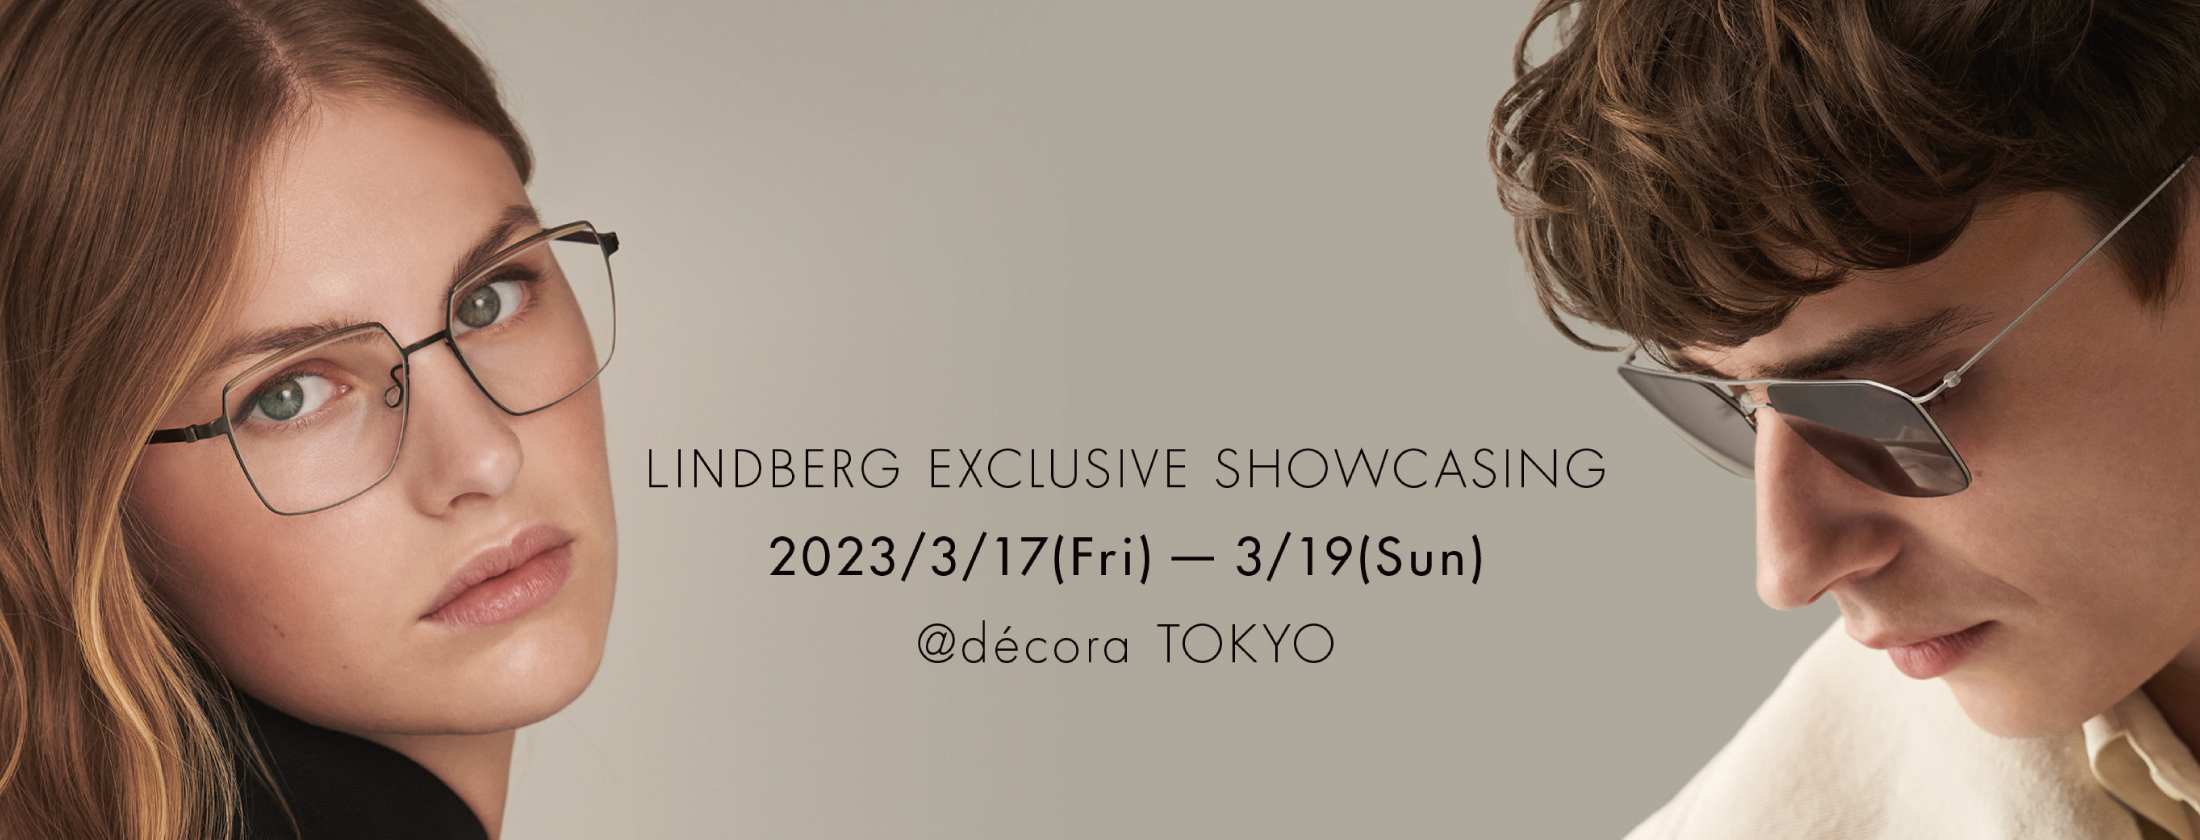 LINDBERG EXCLUSIVE SHOWCAING　@decora TOKYO